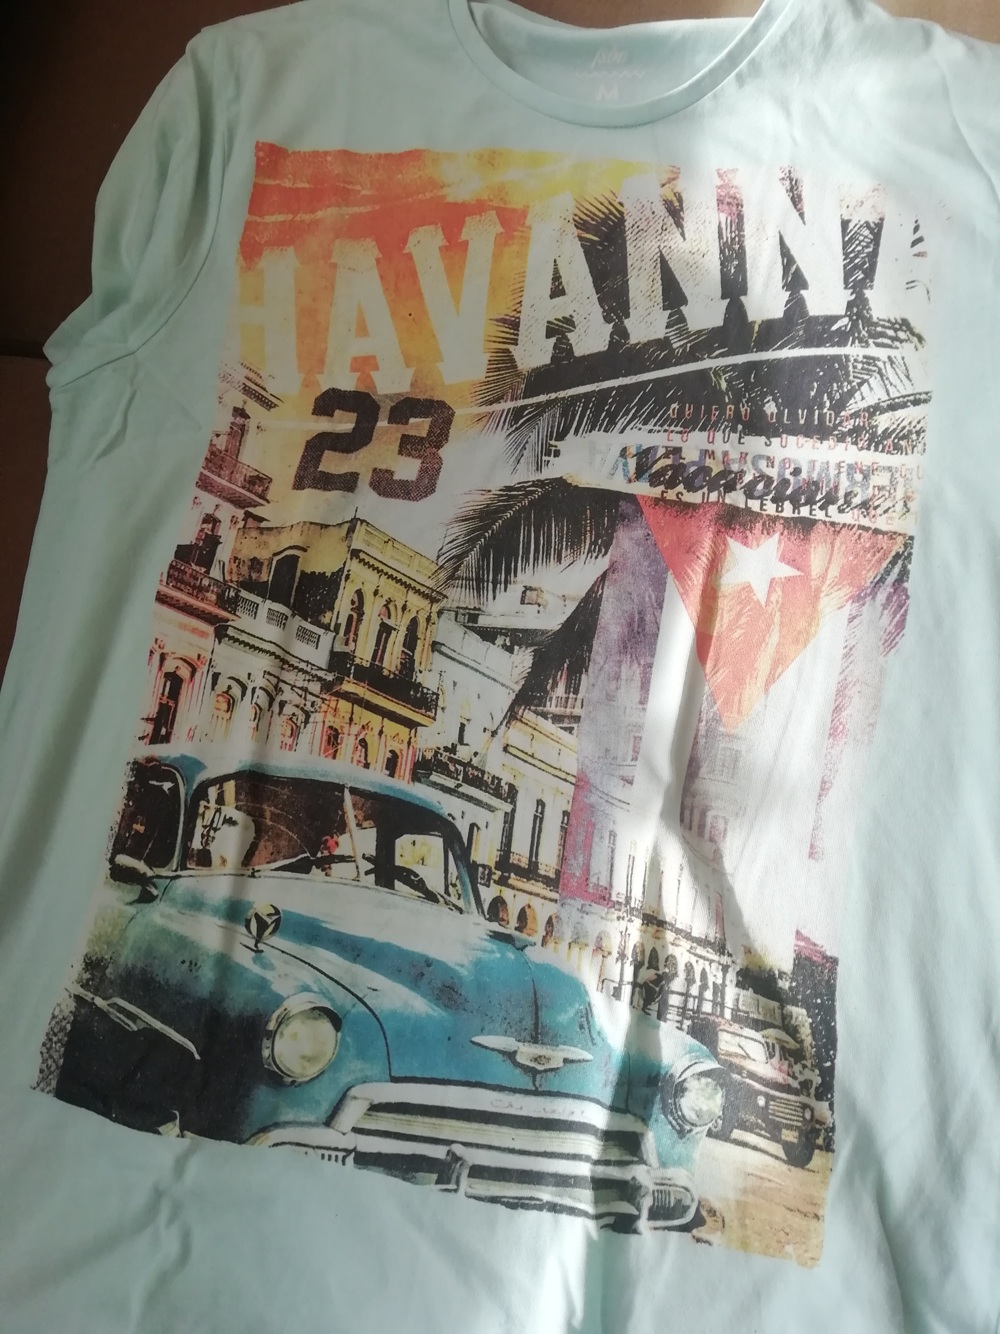 Verkaufe T-Shirt von fsbn, Slim fit, Gr. M, Motiv: Havanna